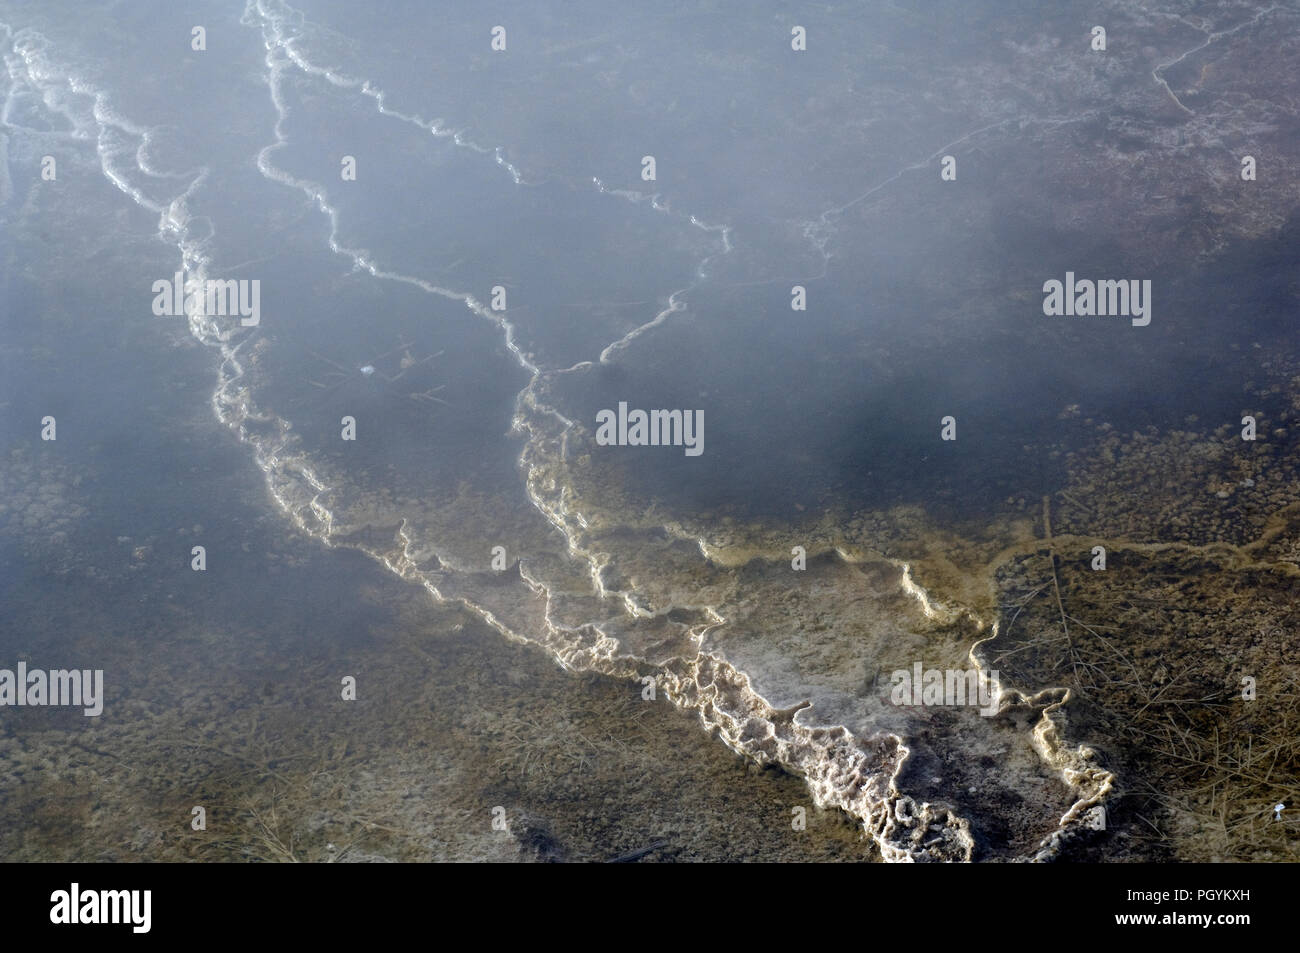 USA - Yellowstone - Hot Spring - Limestone Source d'eau chaude - Concretion calcaire Stock Photo